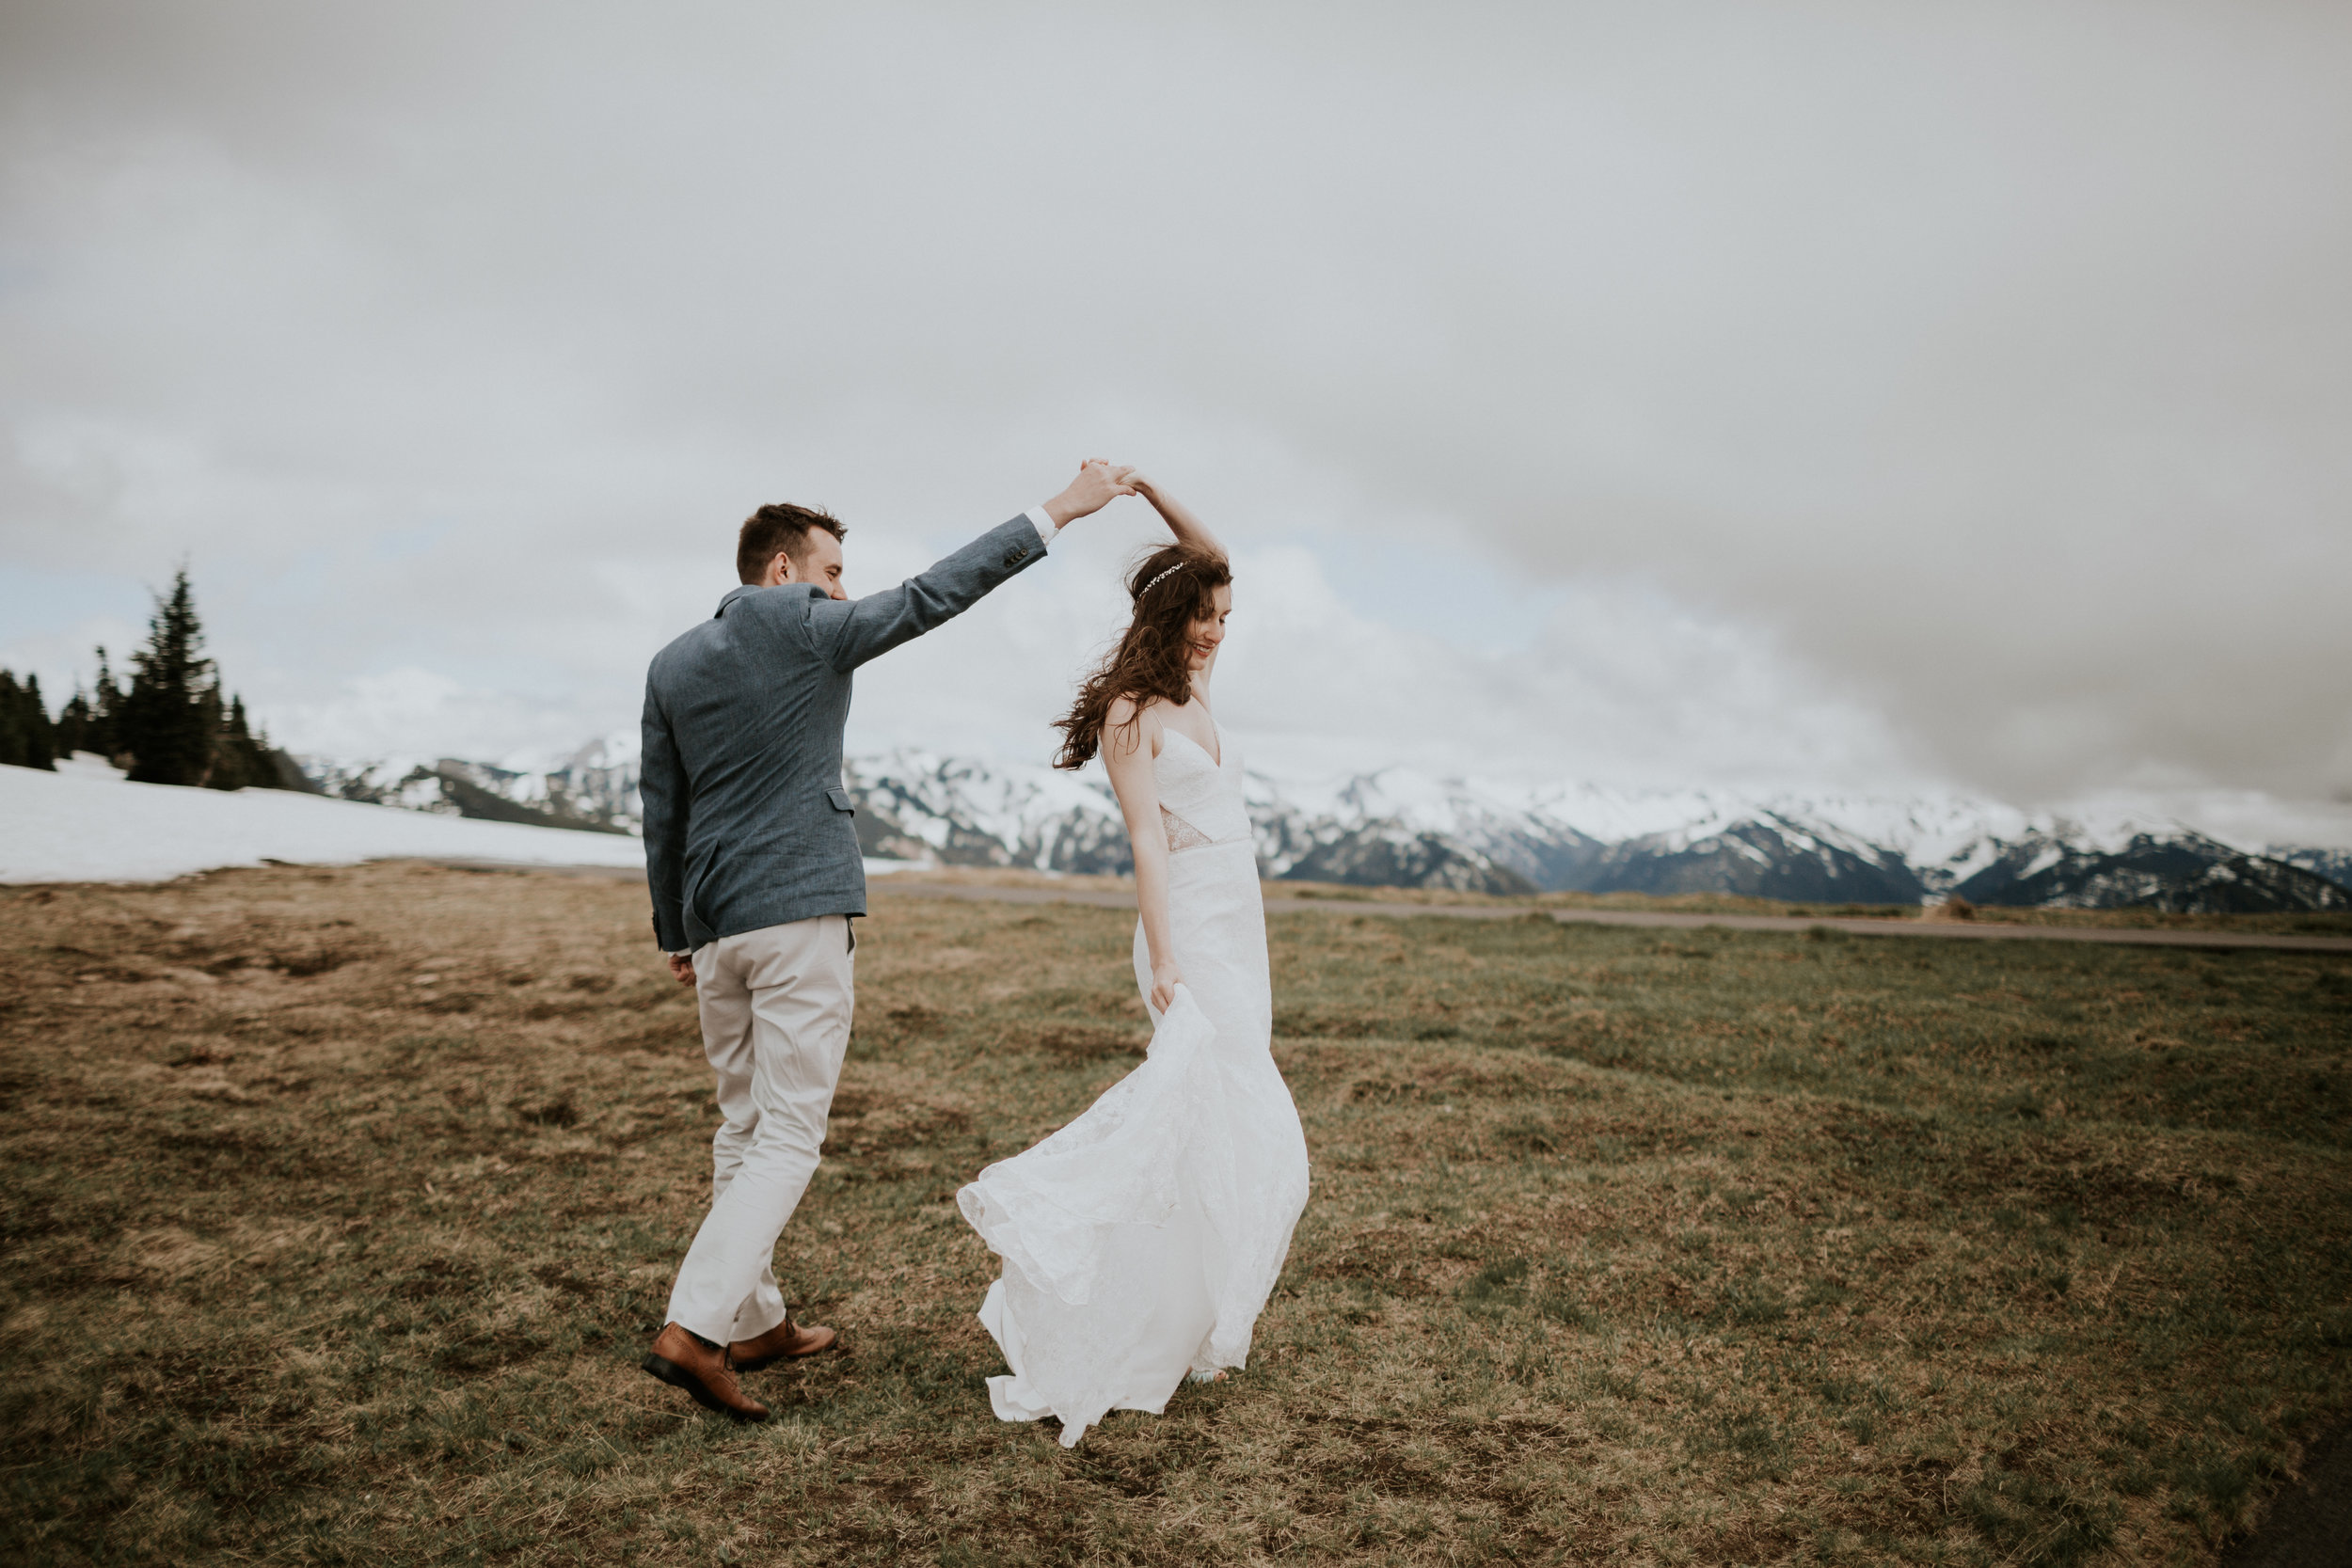 PNW-elopement-wedding-engagement-olympic national park-port angeles-hurricane ridge-lake crescent-kayla dawn photography- photographer-photography-kayladawnphoto-185.jpg